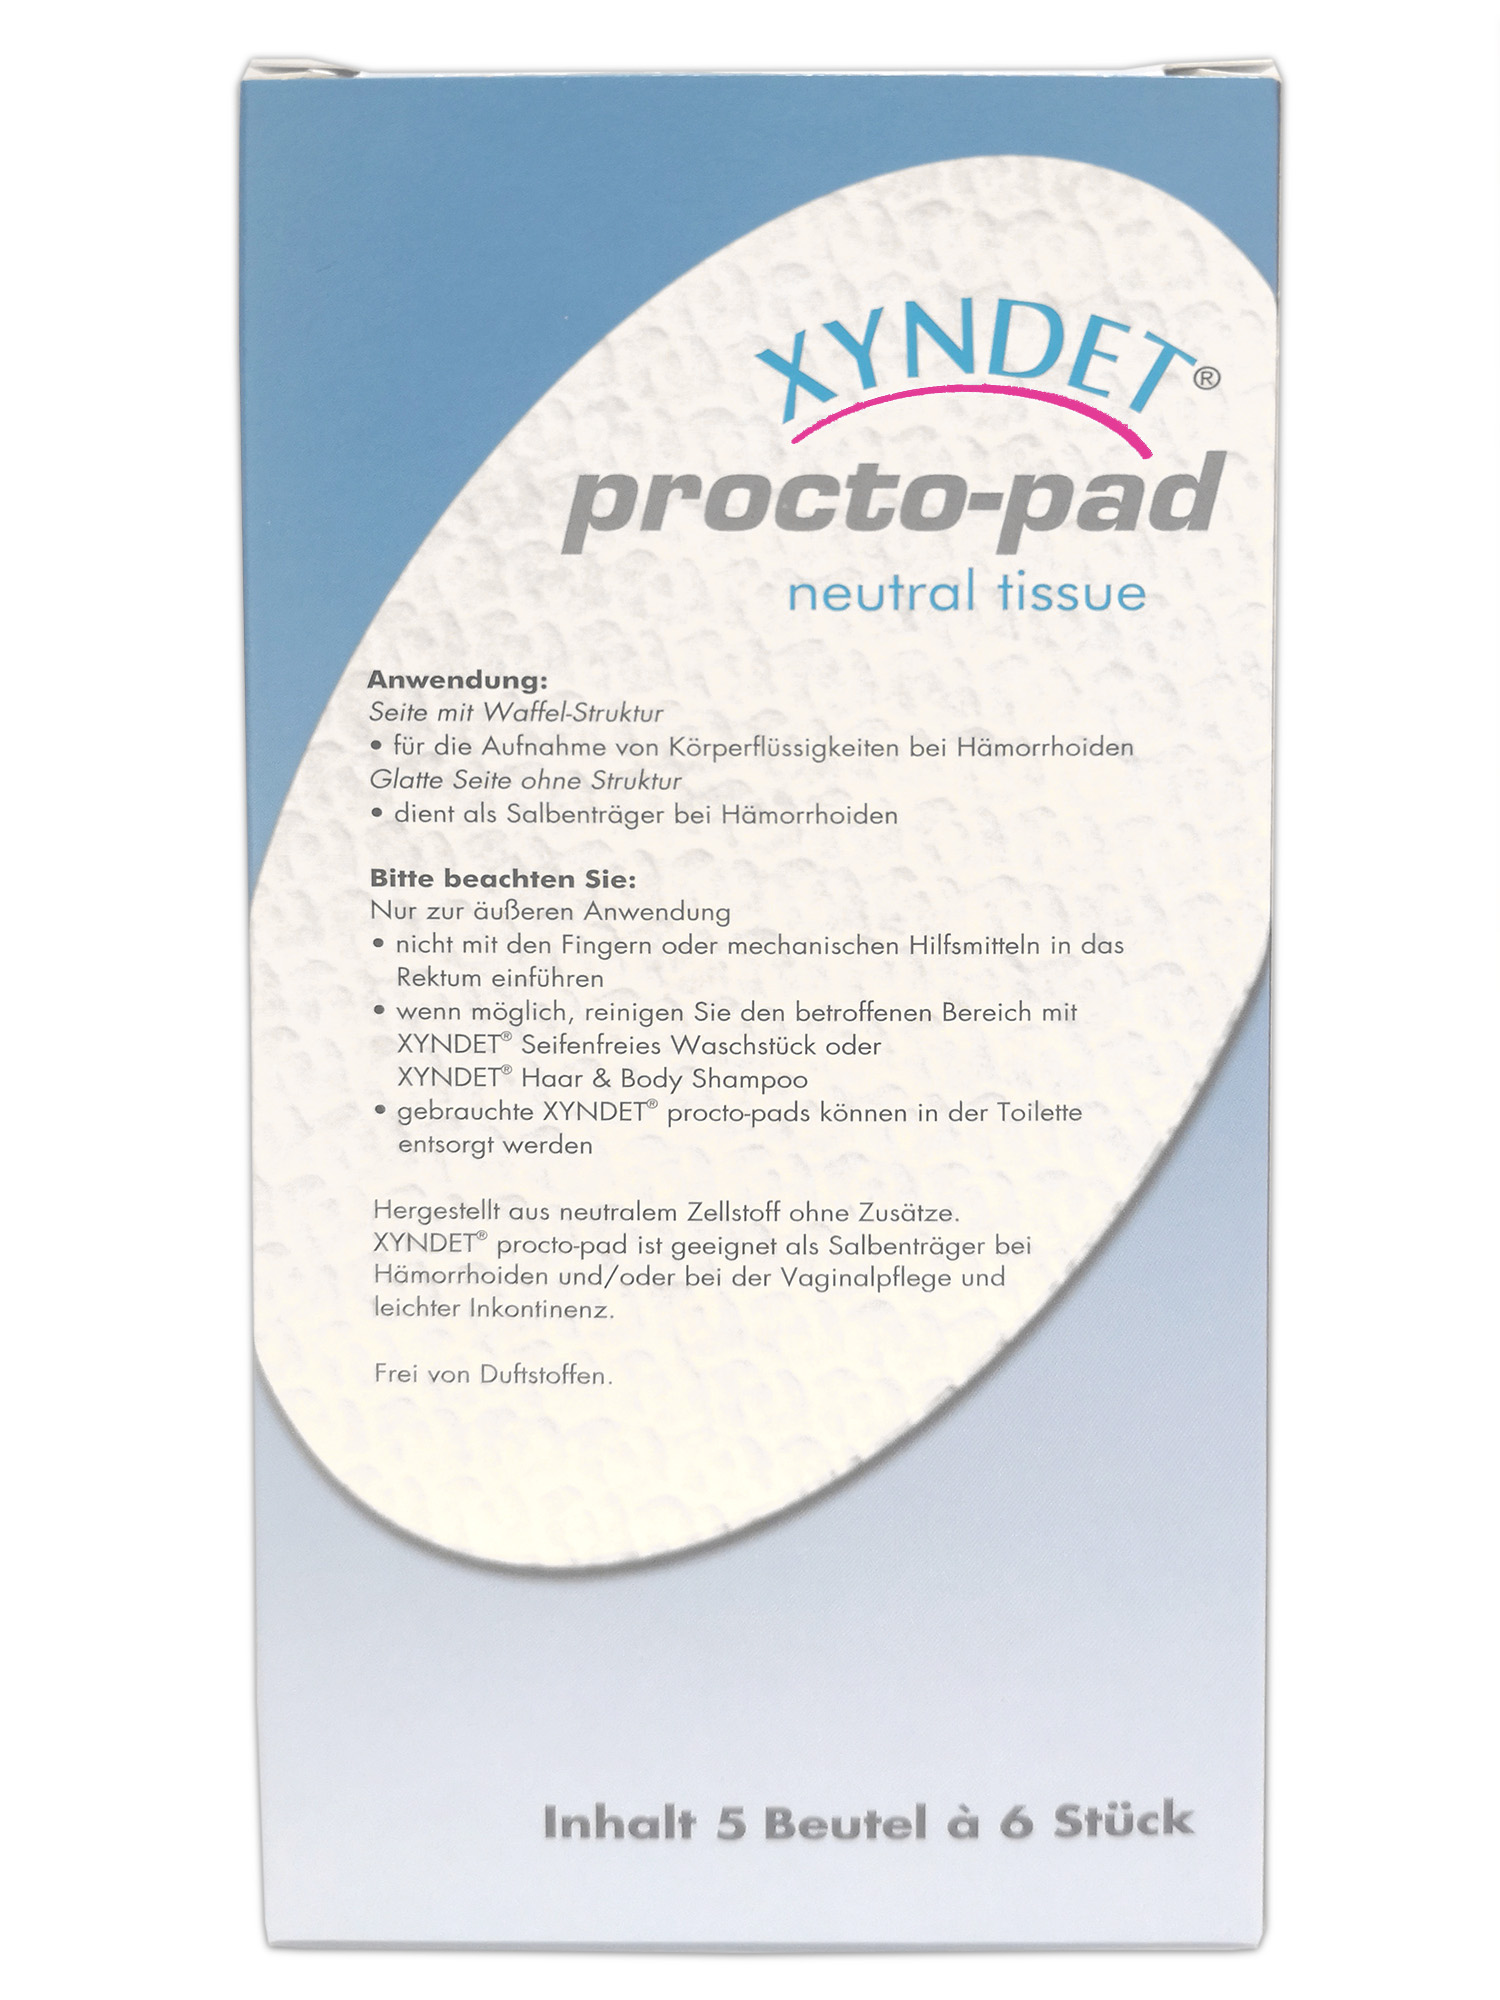 XYNDET® procto-pad